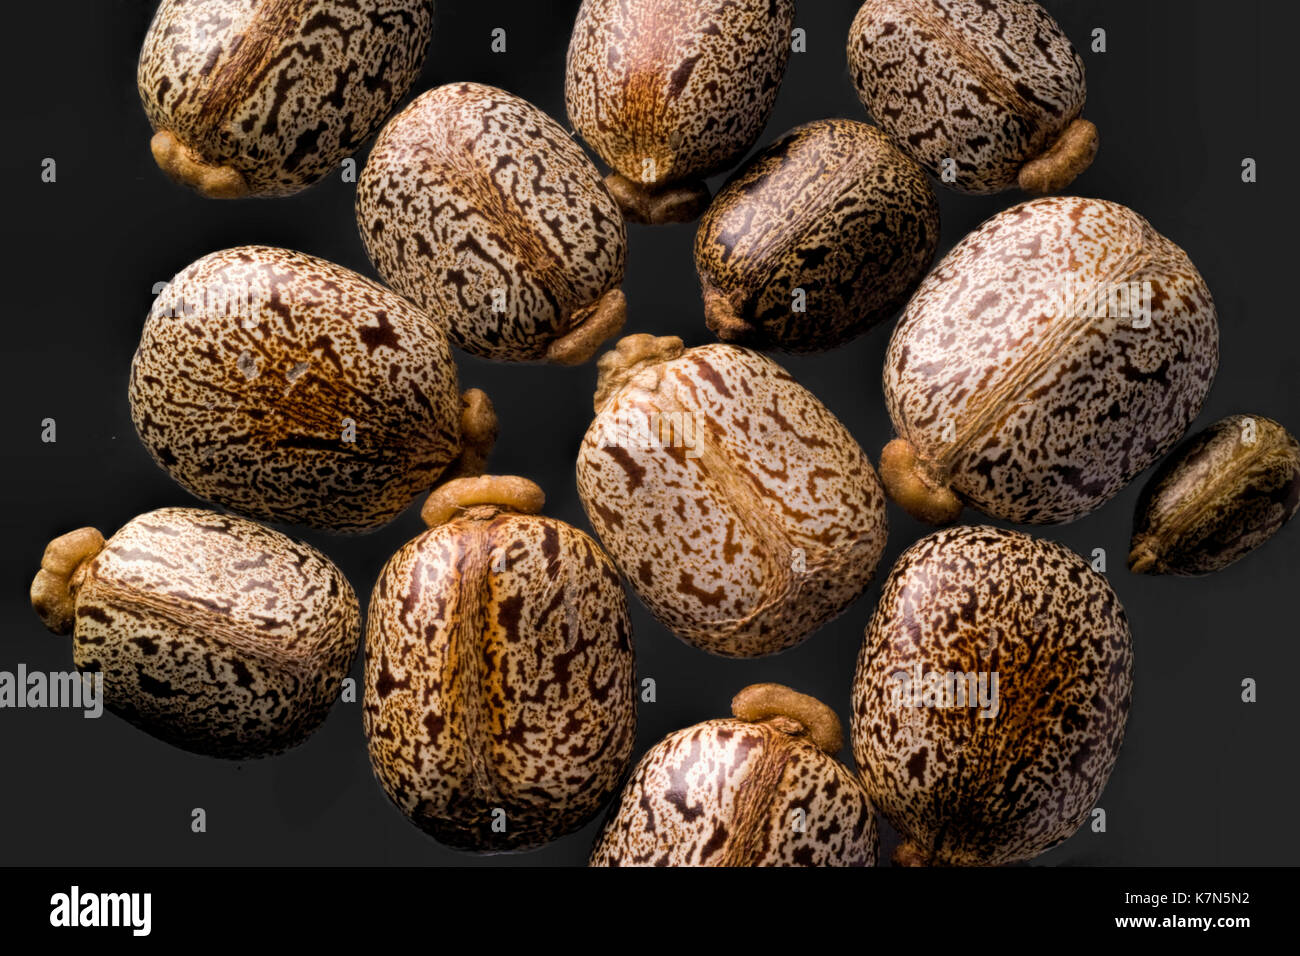 Seeds of the castor oil plant Ricinus communis. Stock Photo